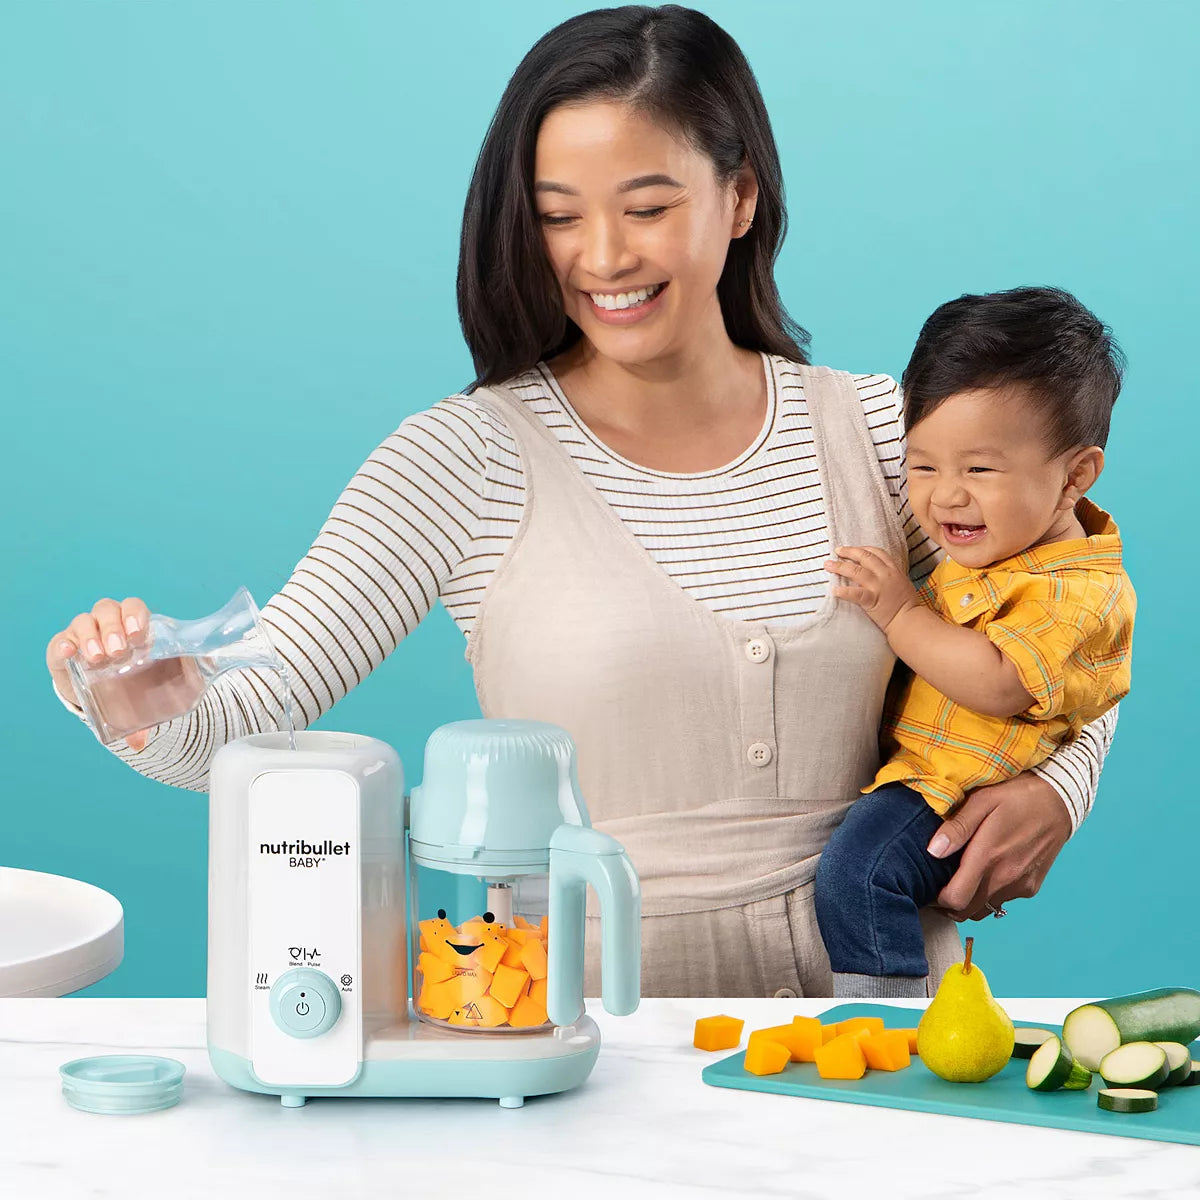 NutriBullet Baby- A parents must-have baby blender. 